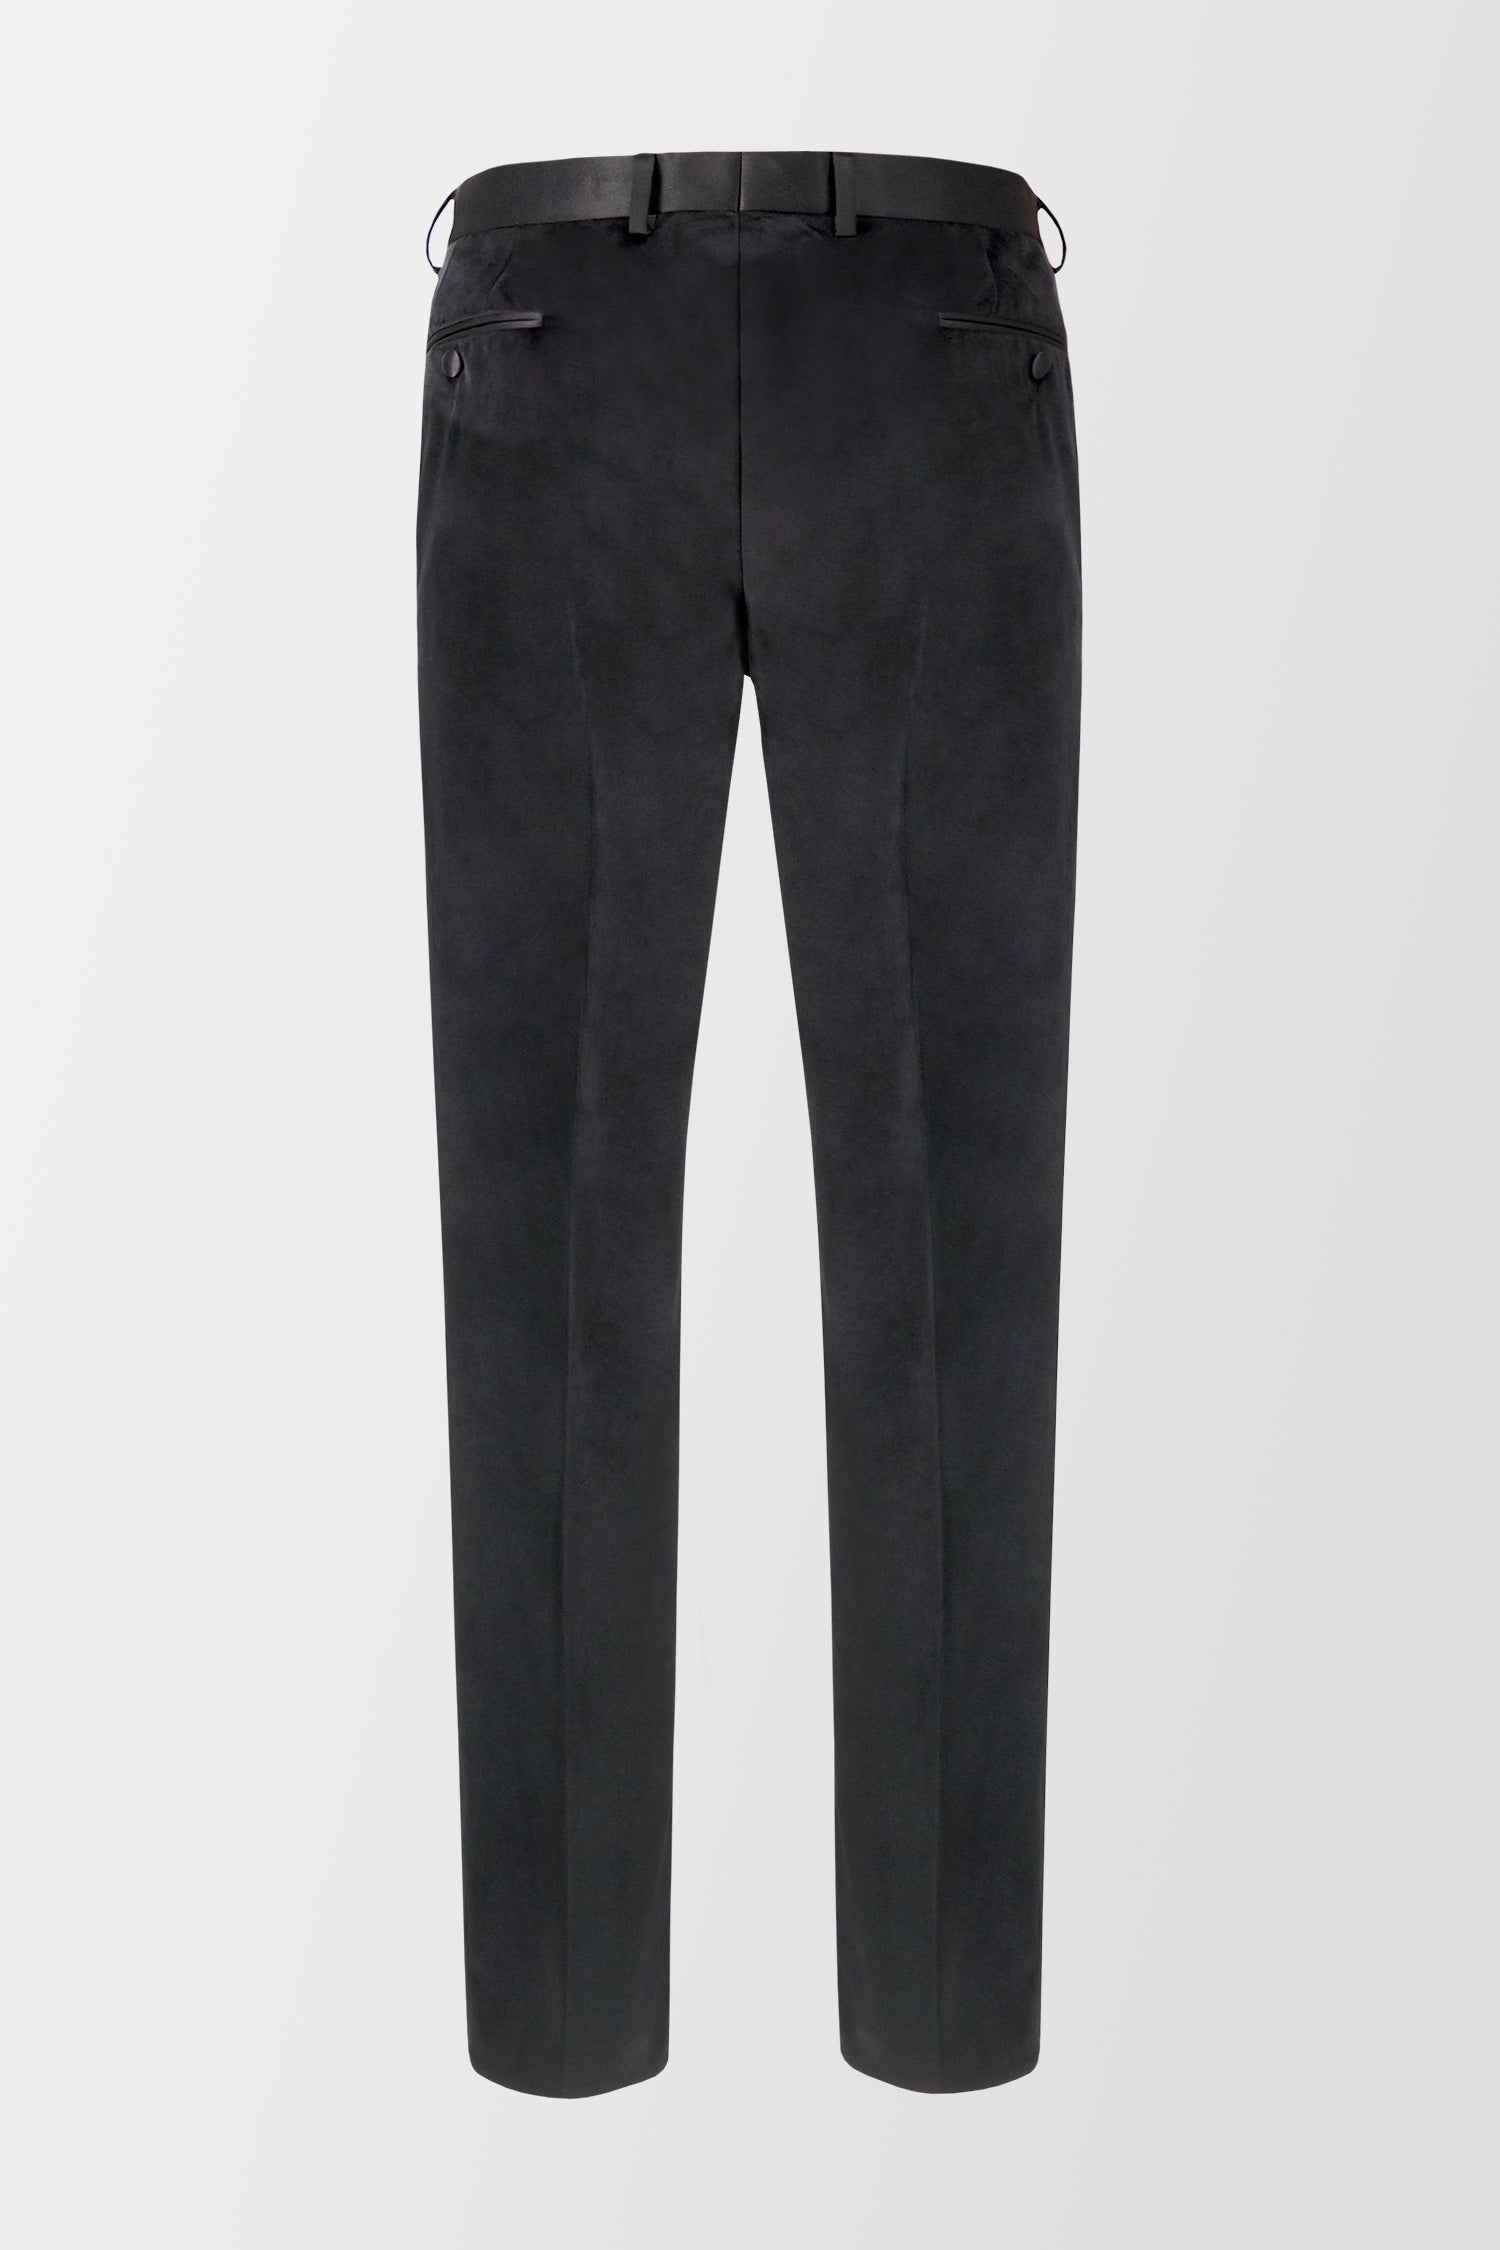 Billionaire Black Slim Fit Elegant Trousers